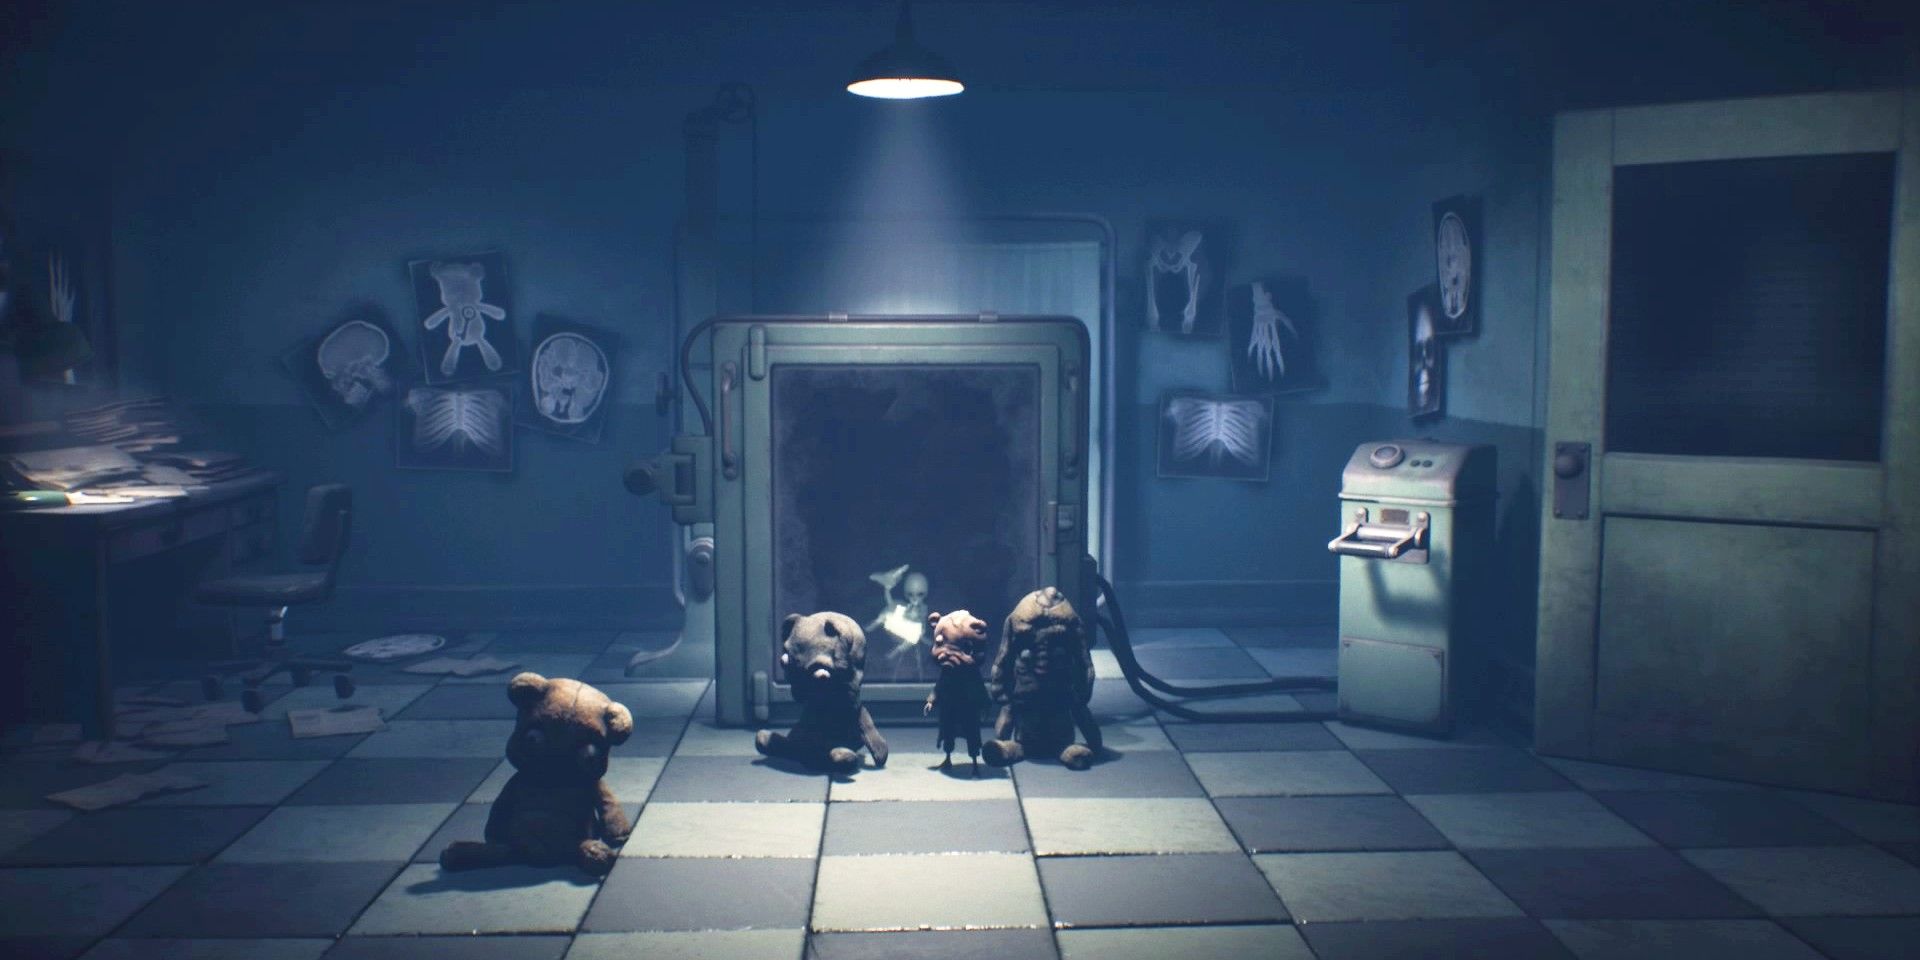 Creepy teddy bears in the game Little Nightmares 2 